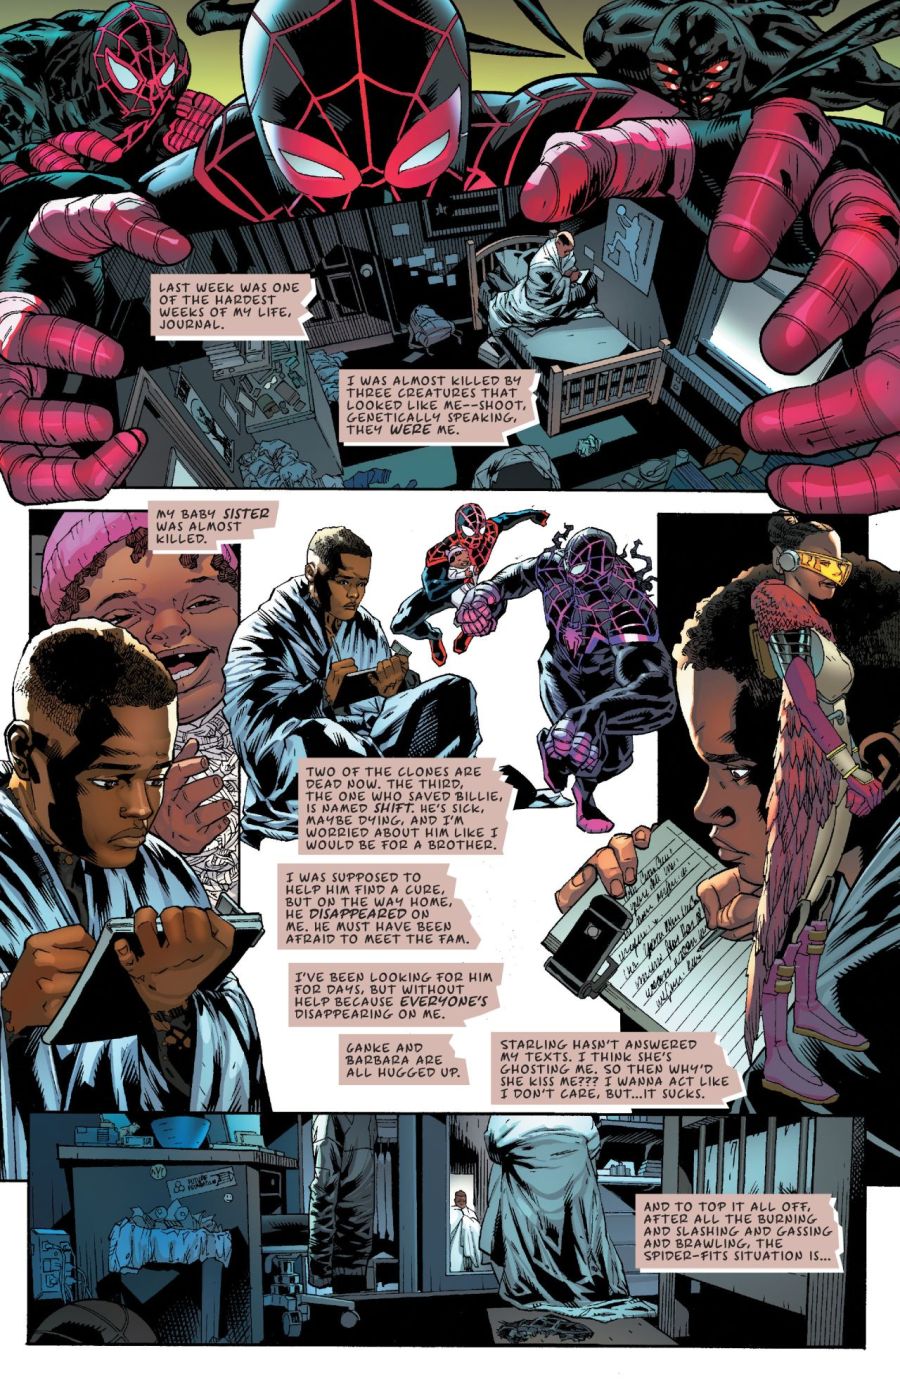 Miles Morales: Spider-Man #29